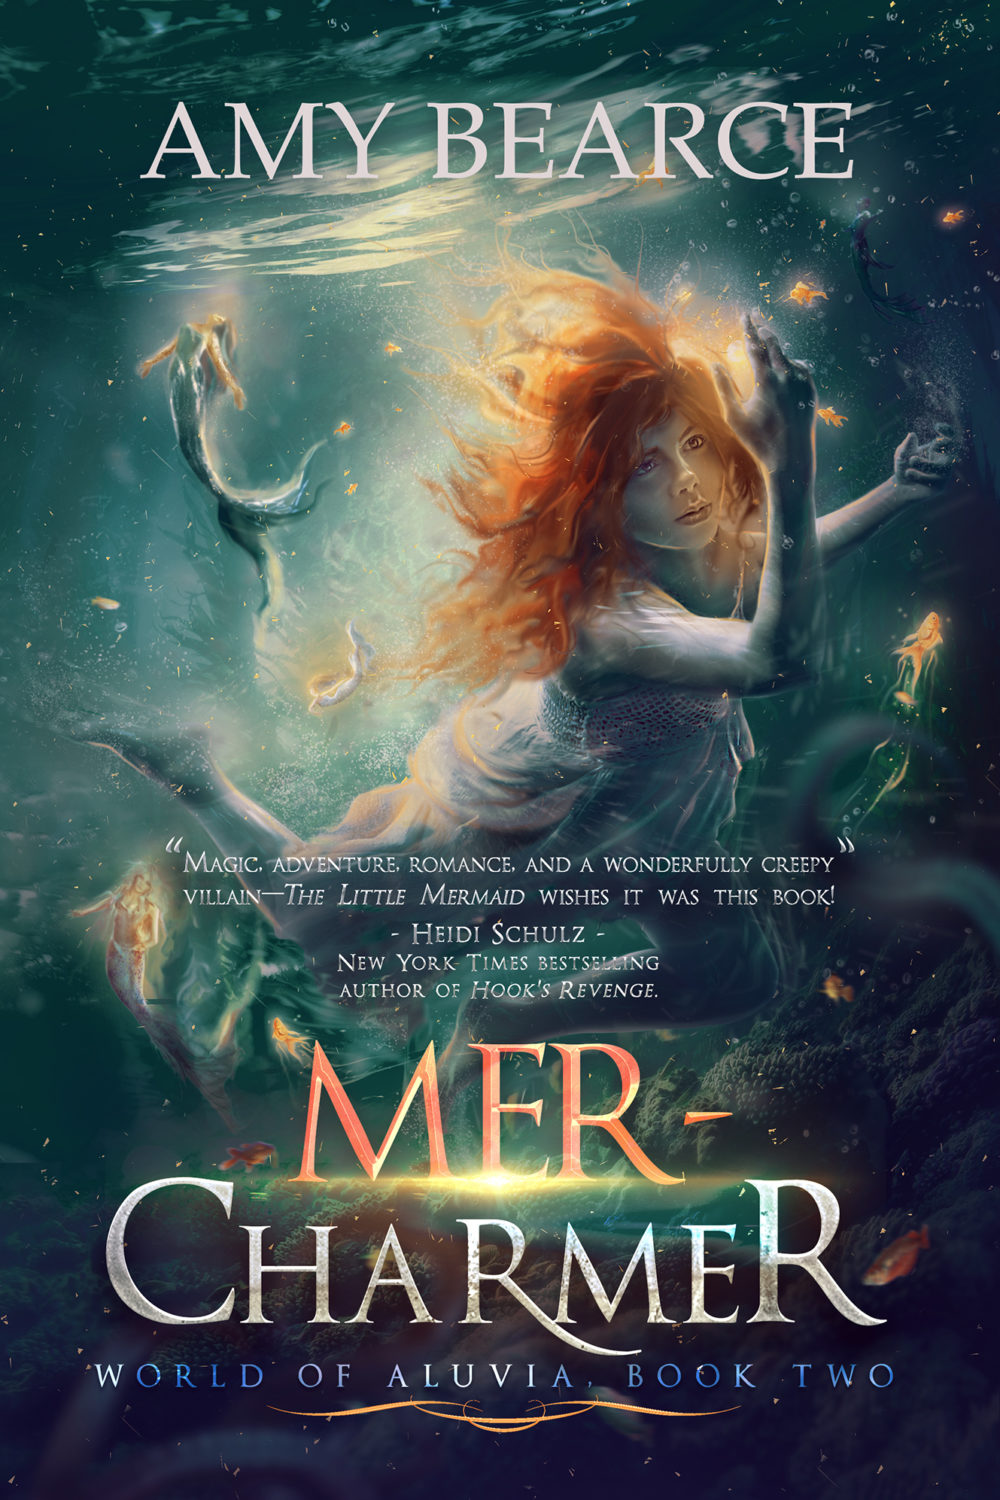 Mer-Charmer by Amy Bearce